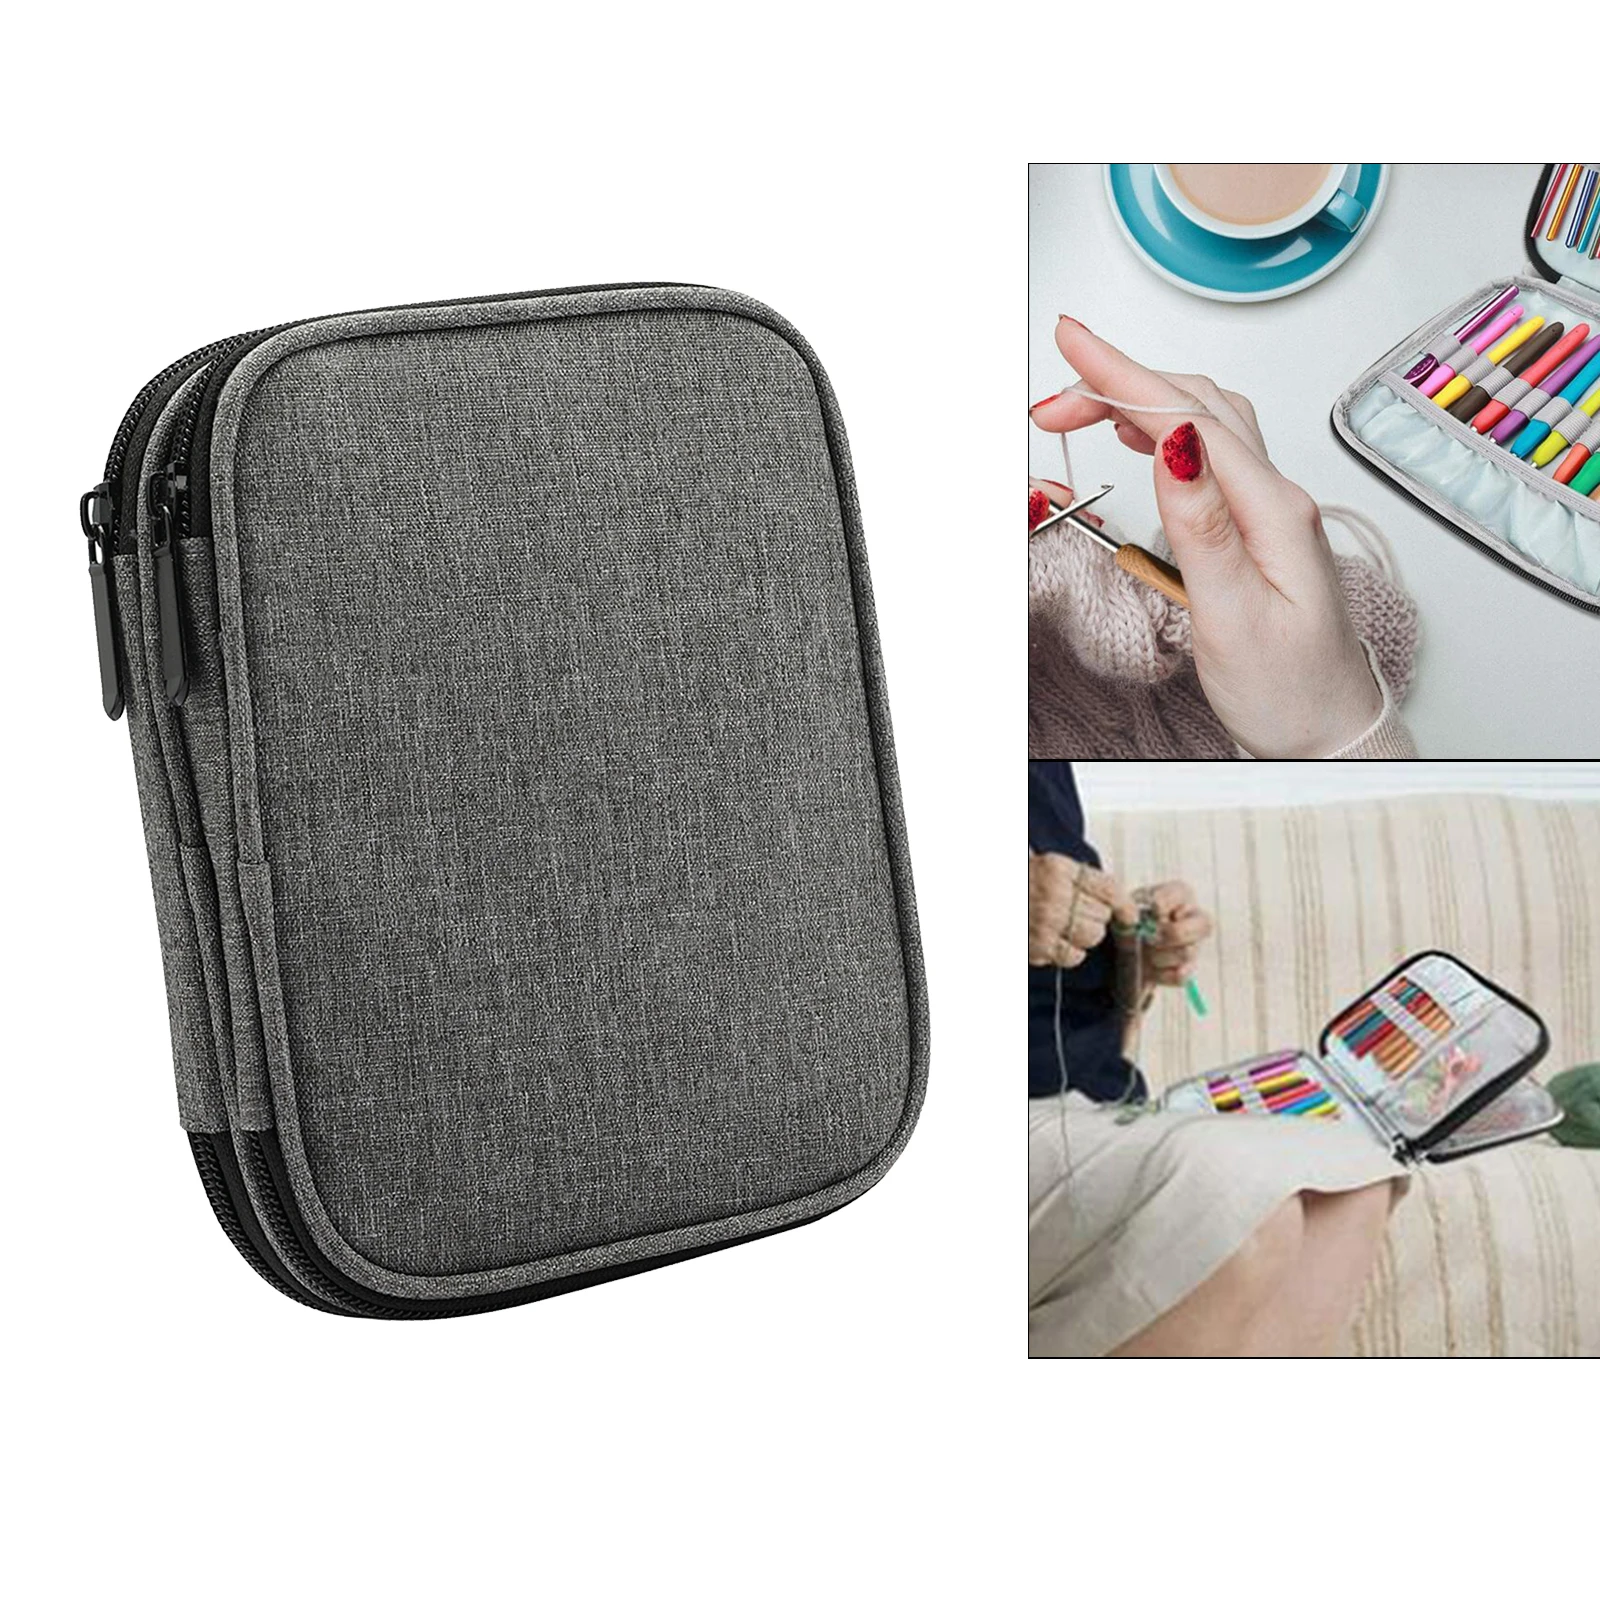 Portable Home Crochet Hooks Needles Case Knitting Accessories Organizer Bag